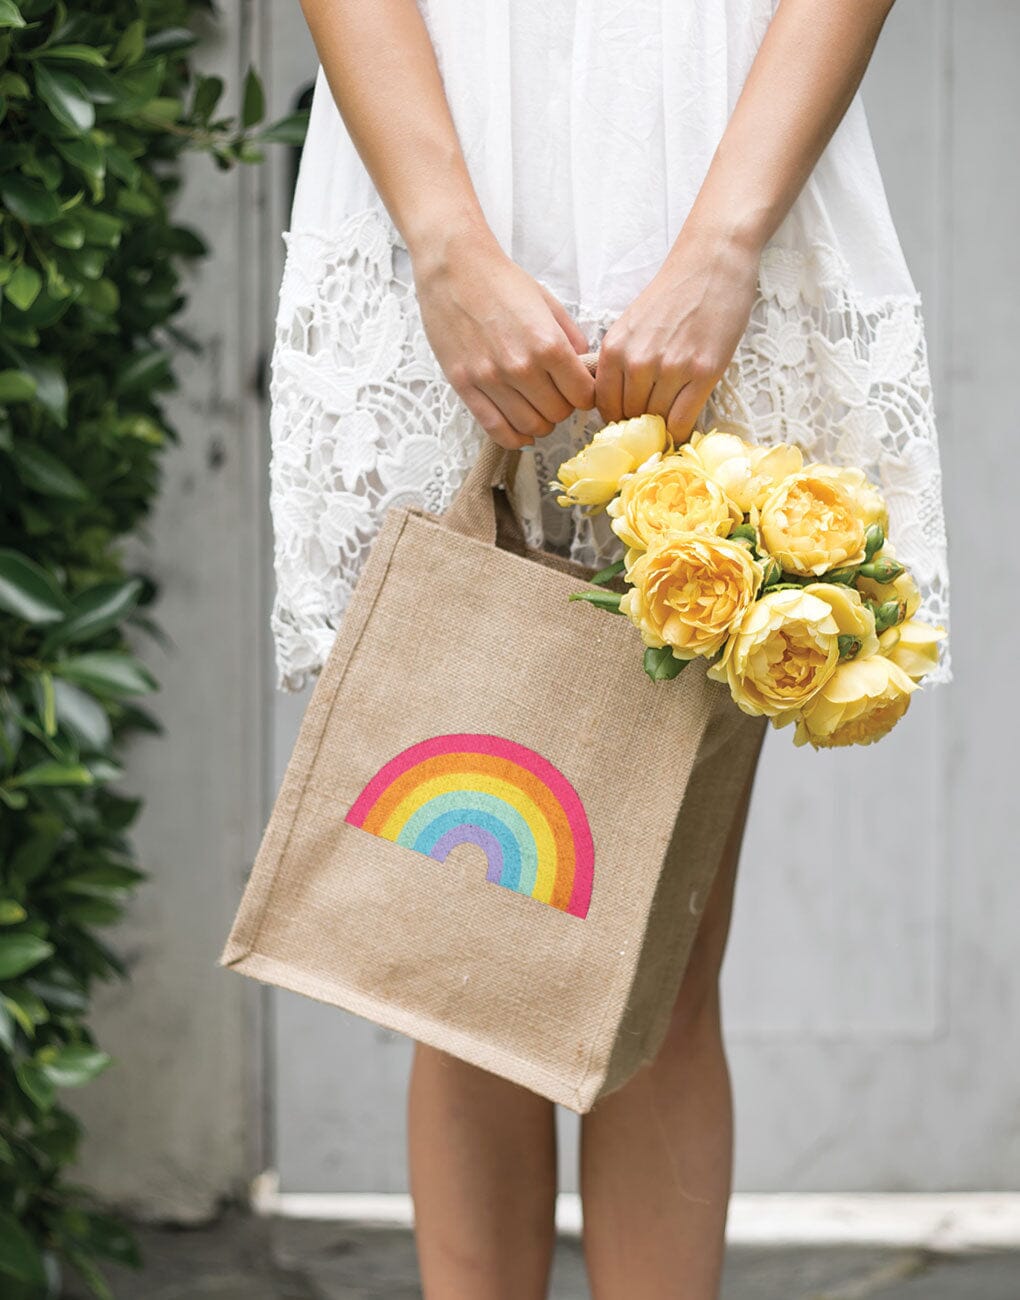 Medium Rainbow Gift Tote Bag | The Little Market